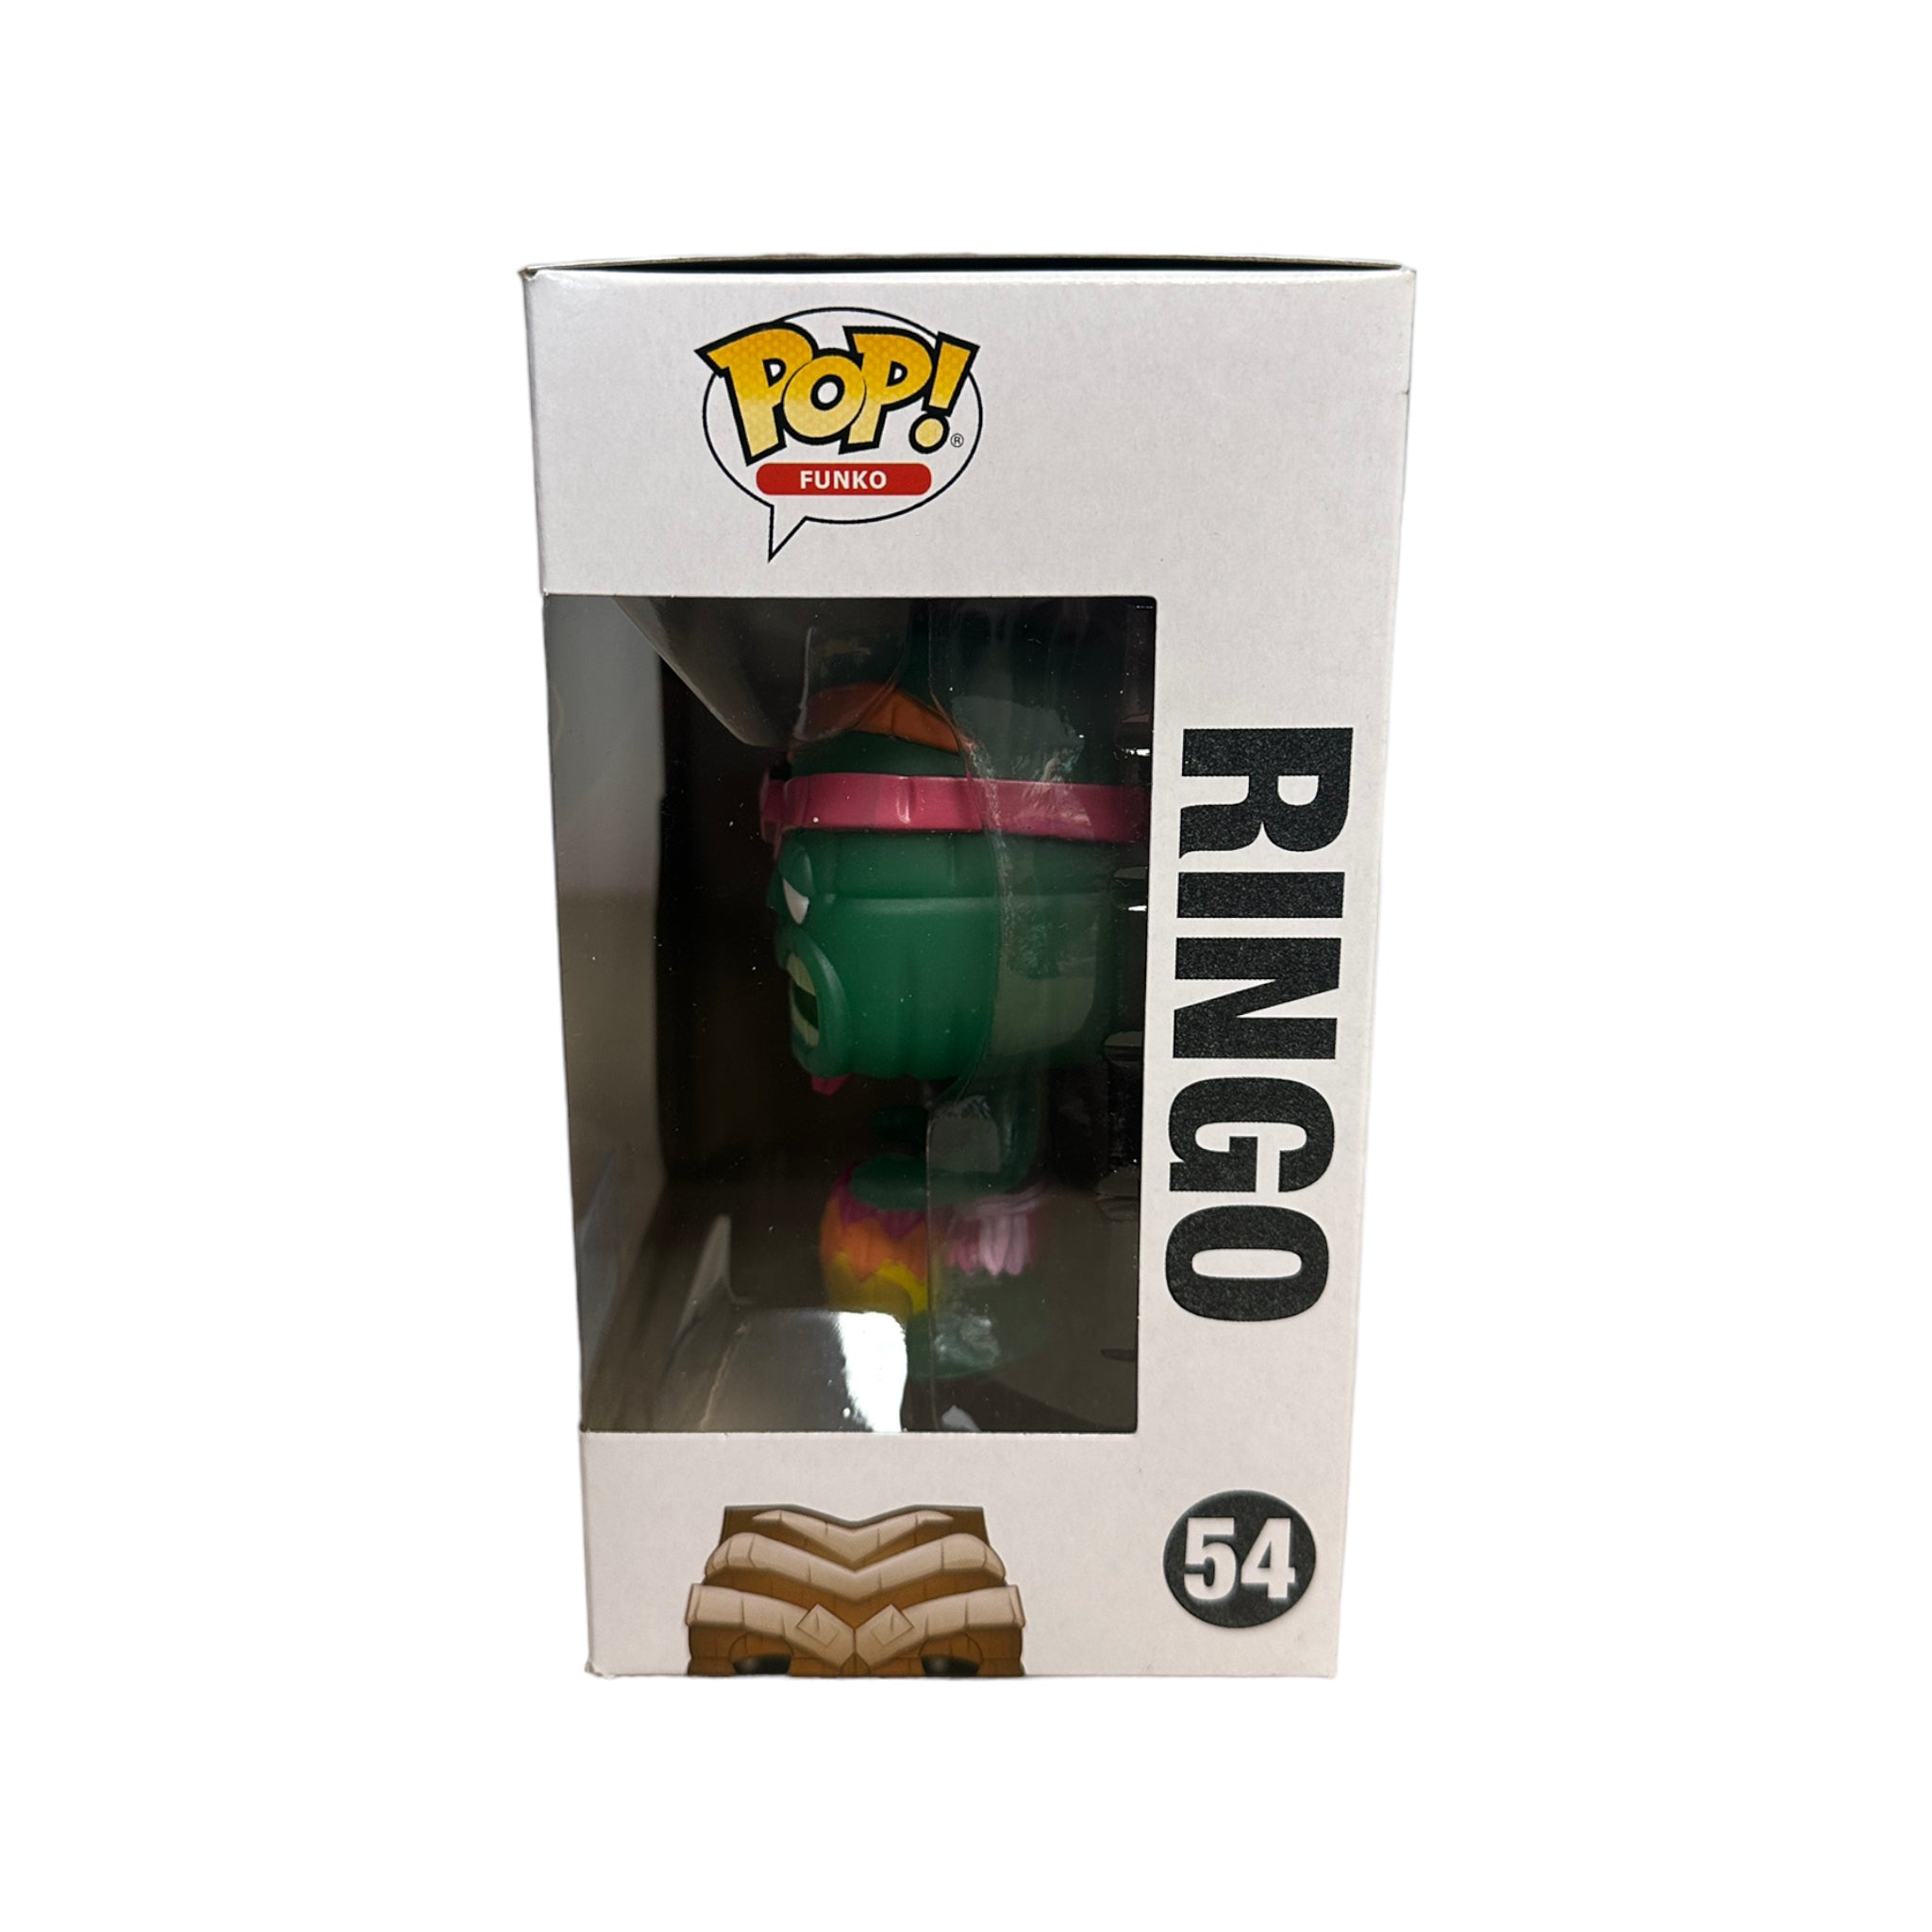 Ringo #54 (Green Glows in the Dark) Funko Pop! - Spastik Plastik - SDCC 2019 Exclusive LE400 Pcs - Condition 8.5/10